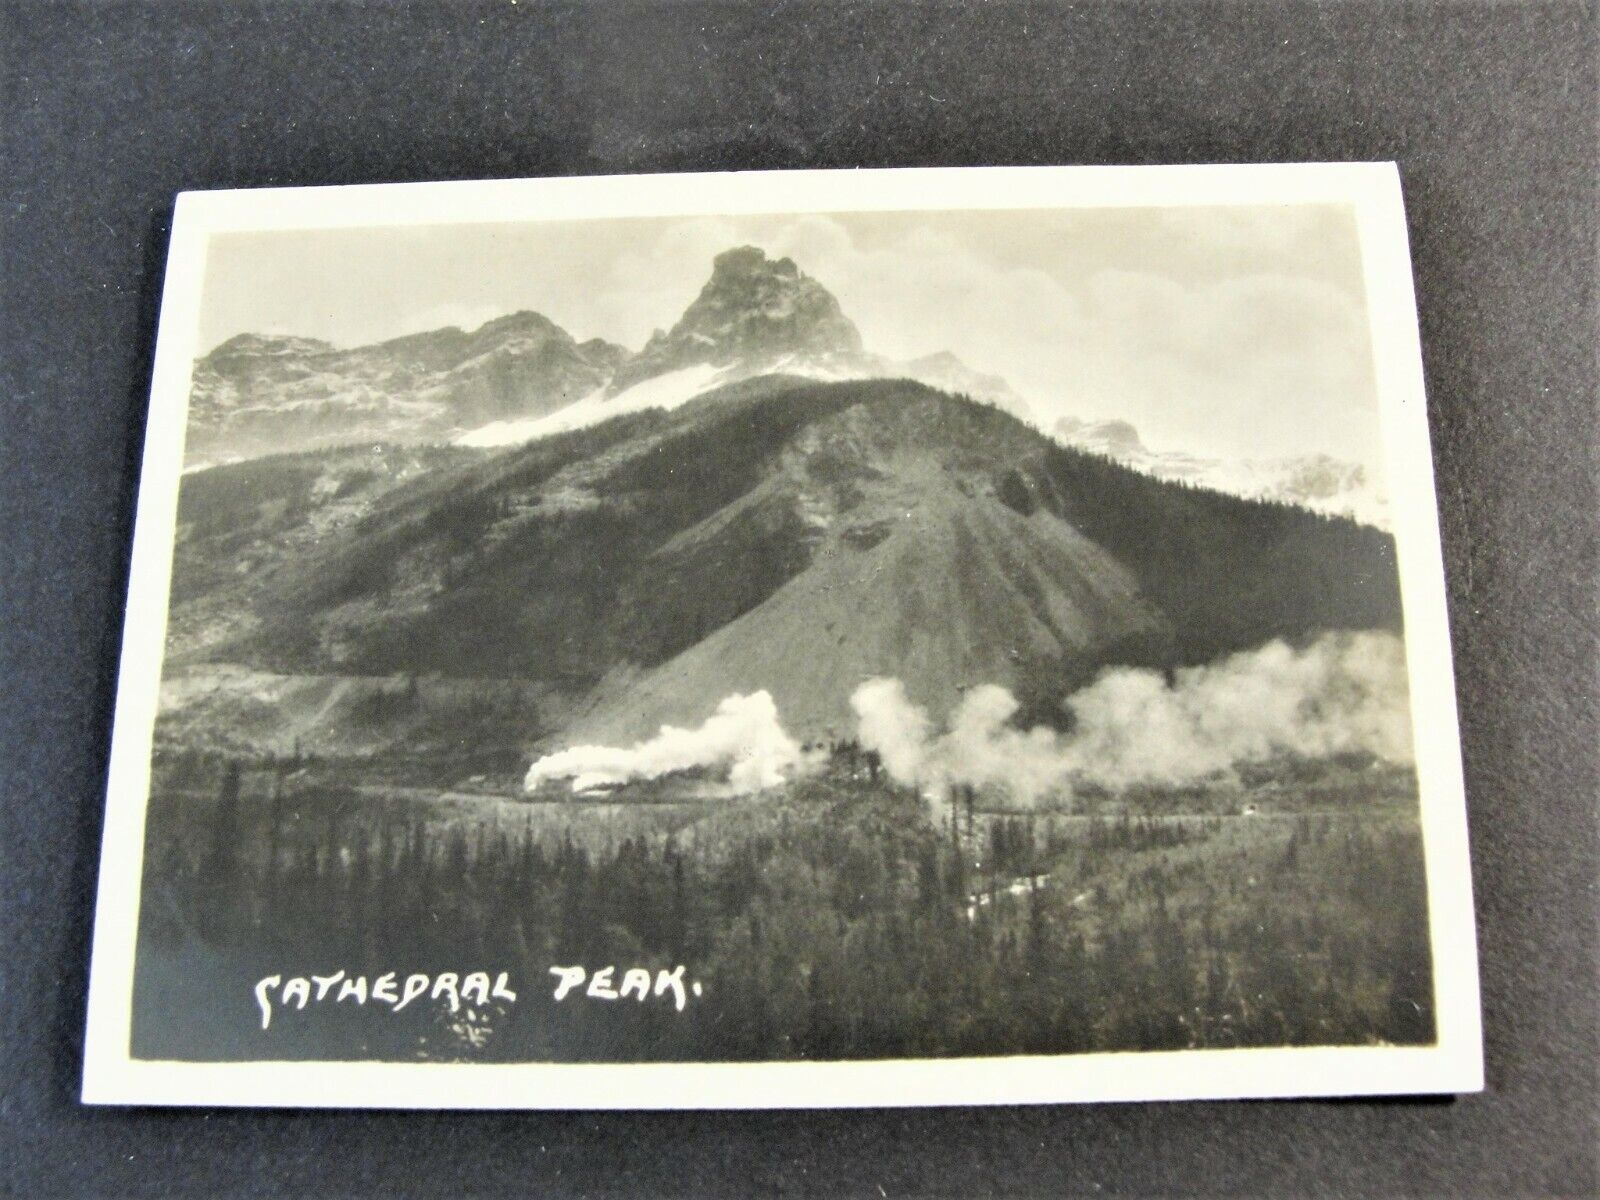 Canadian Rockies, Cathedral Peak - Banff, Alberta, Canada -1920s Photo Card.  